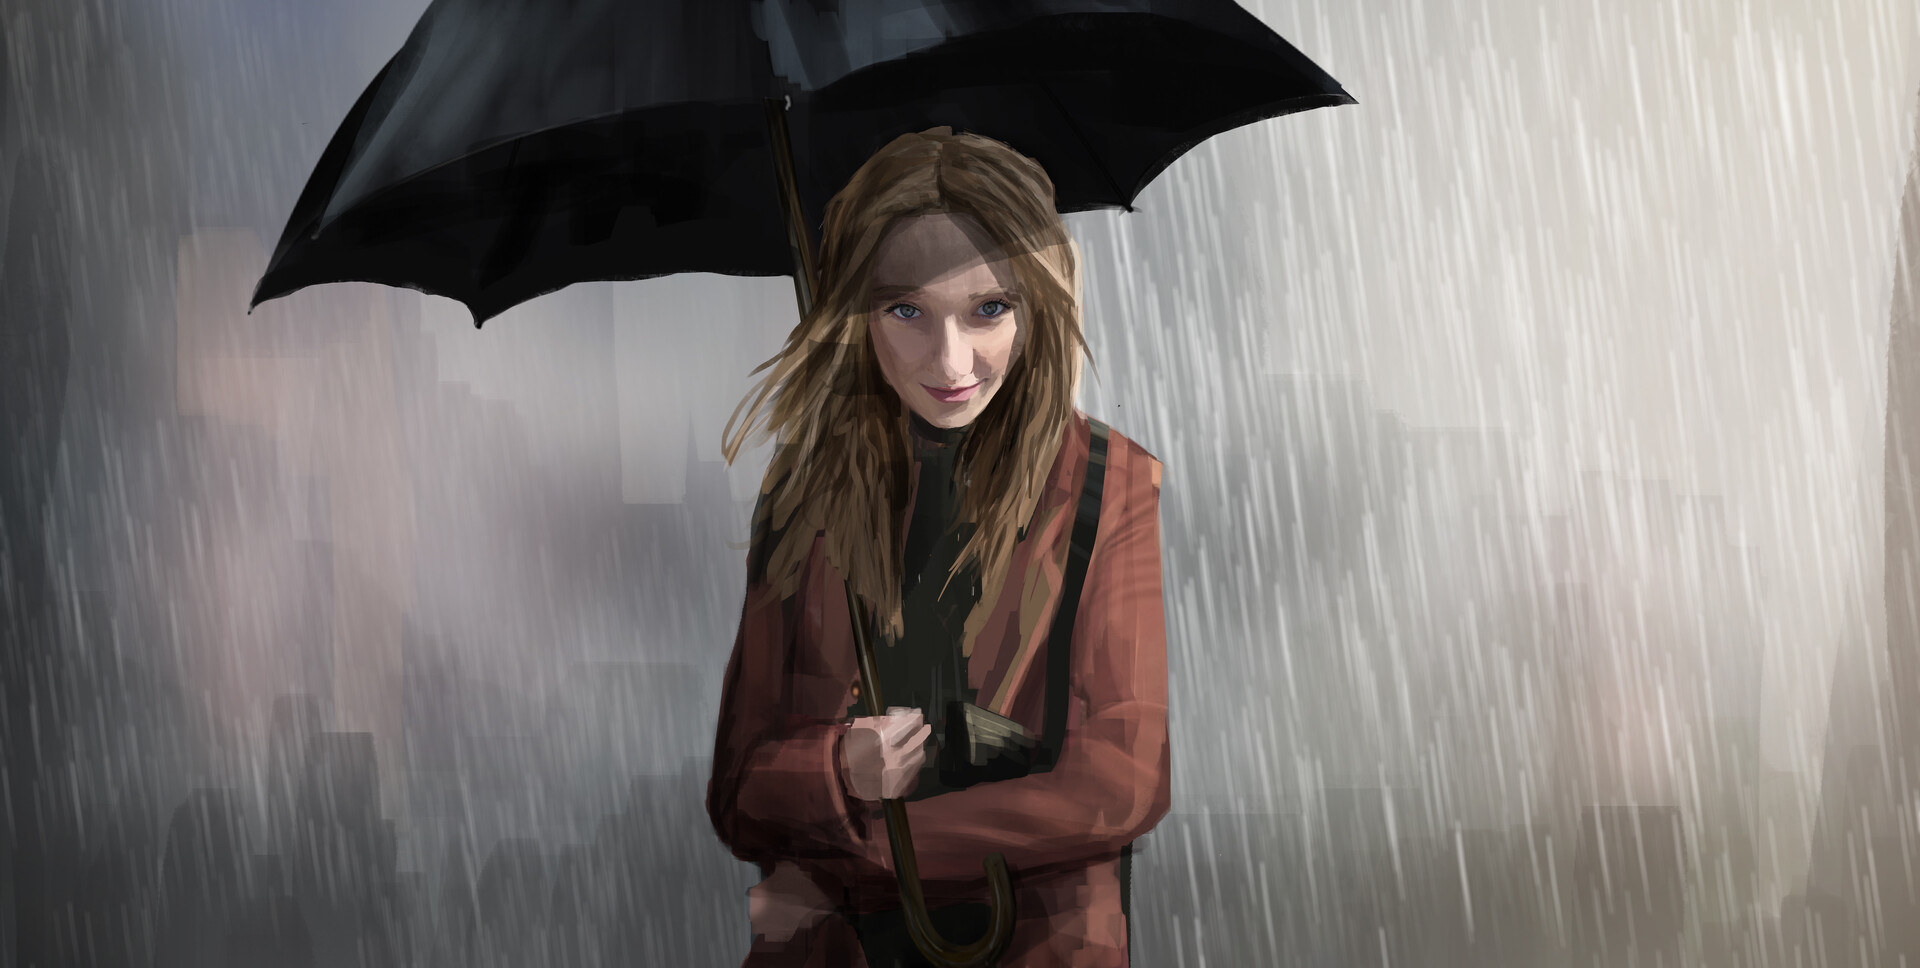 ArtStation - Rainy Portrait